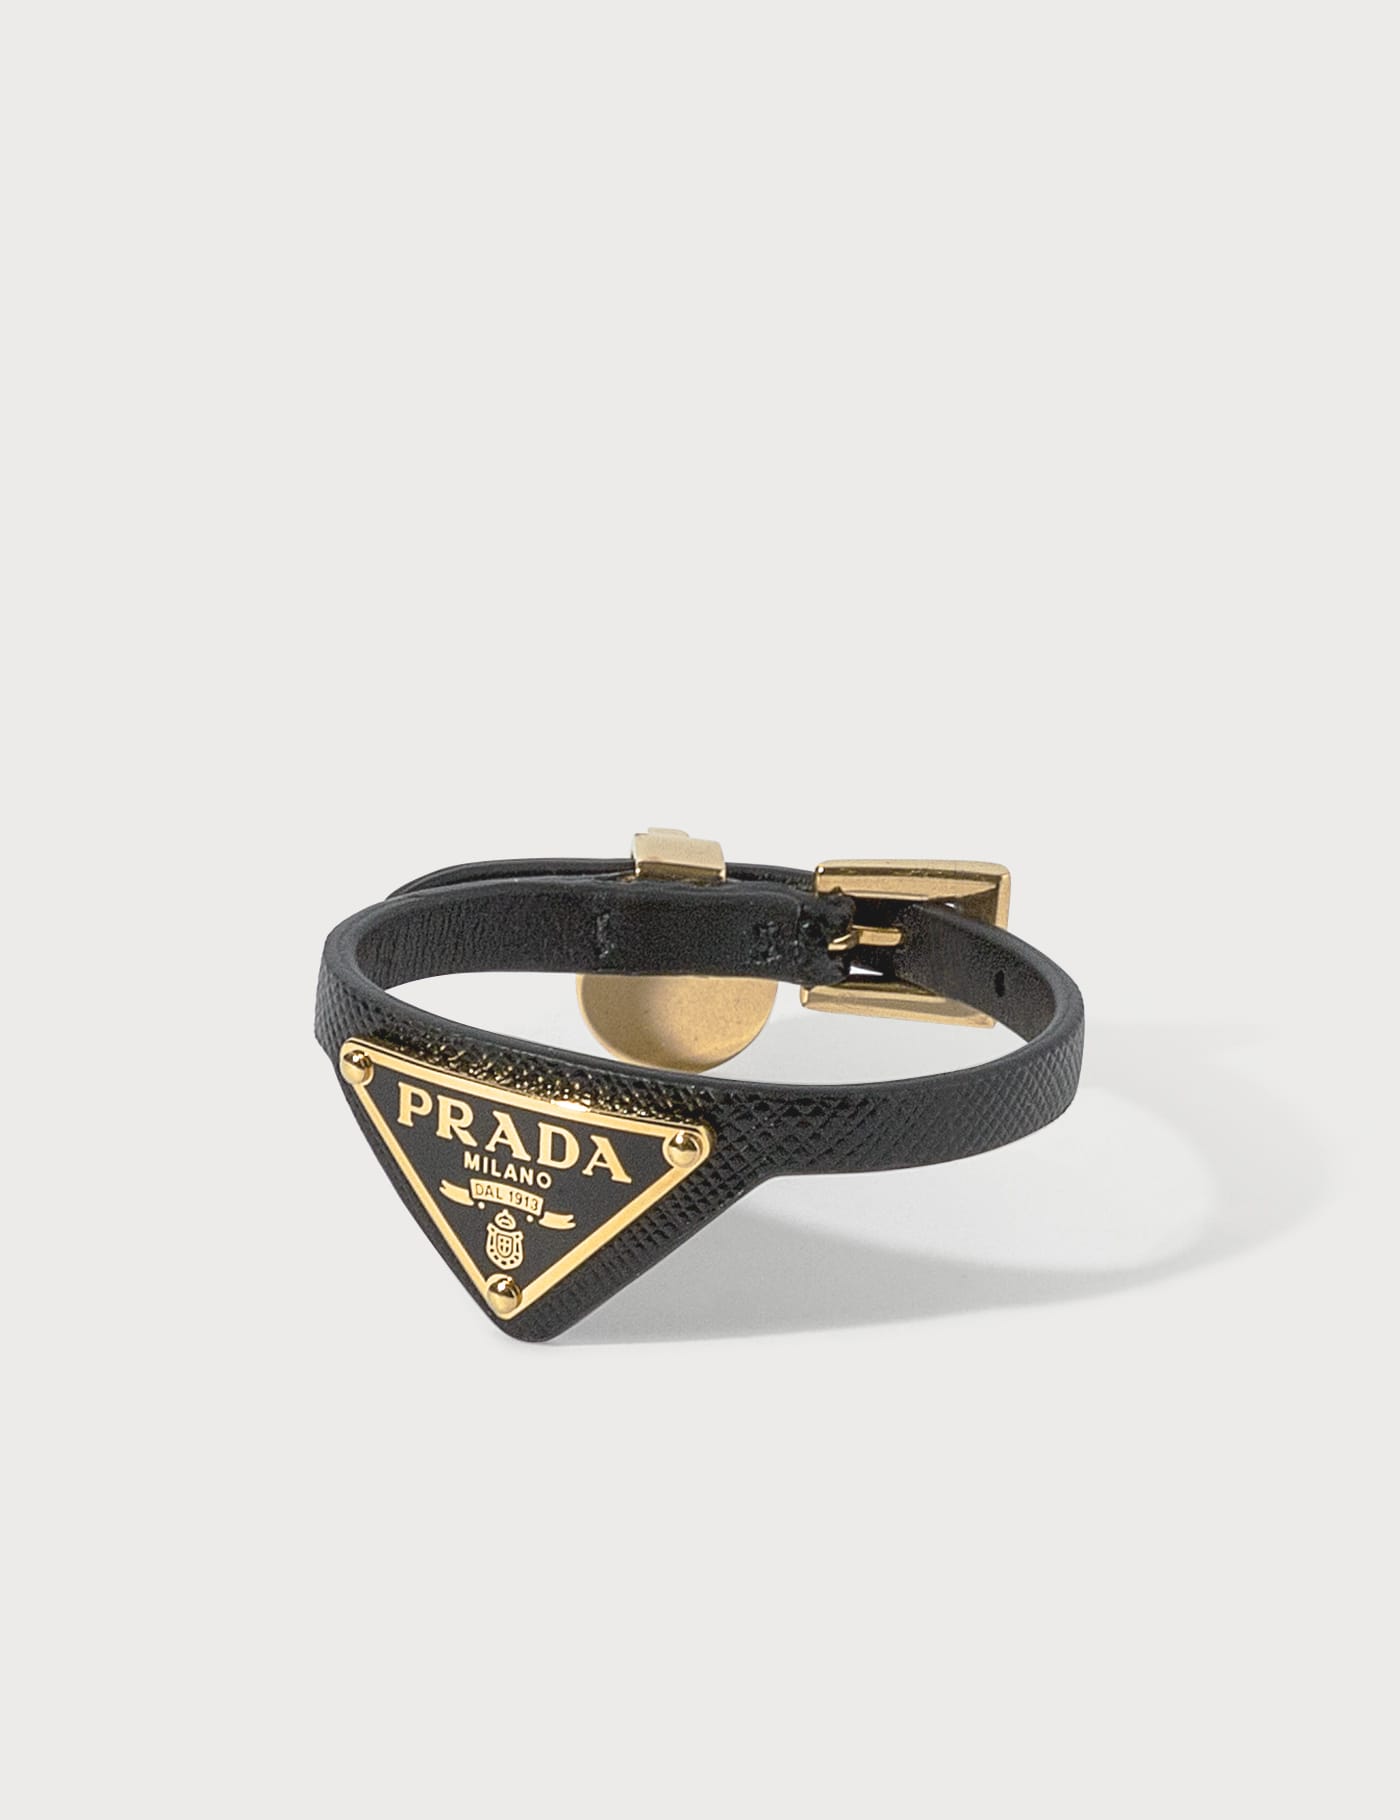 Prada - Logo Leather Bracelet | HBX - Globally Curated Fashion and 